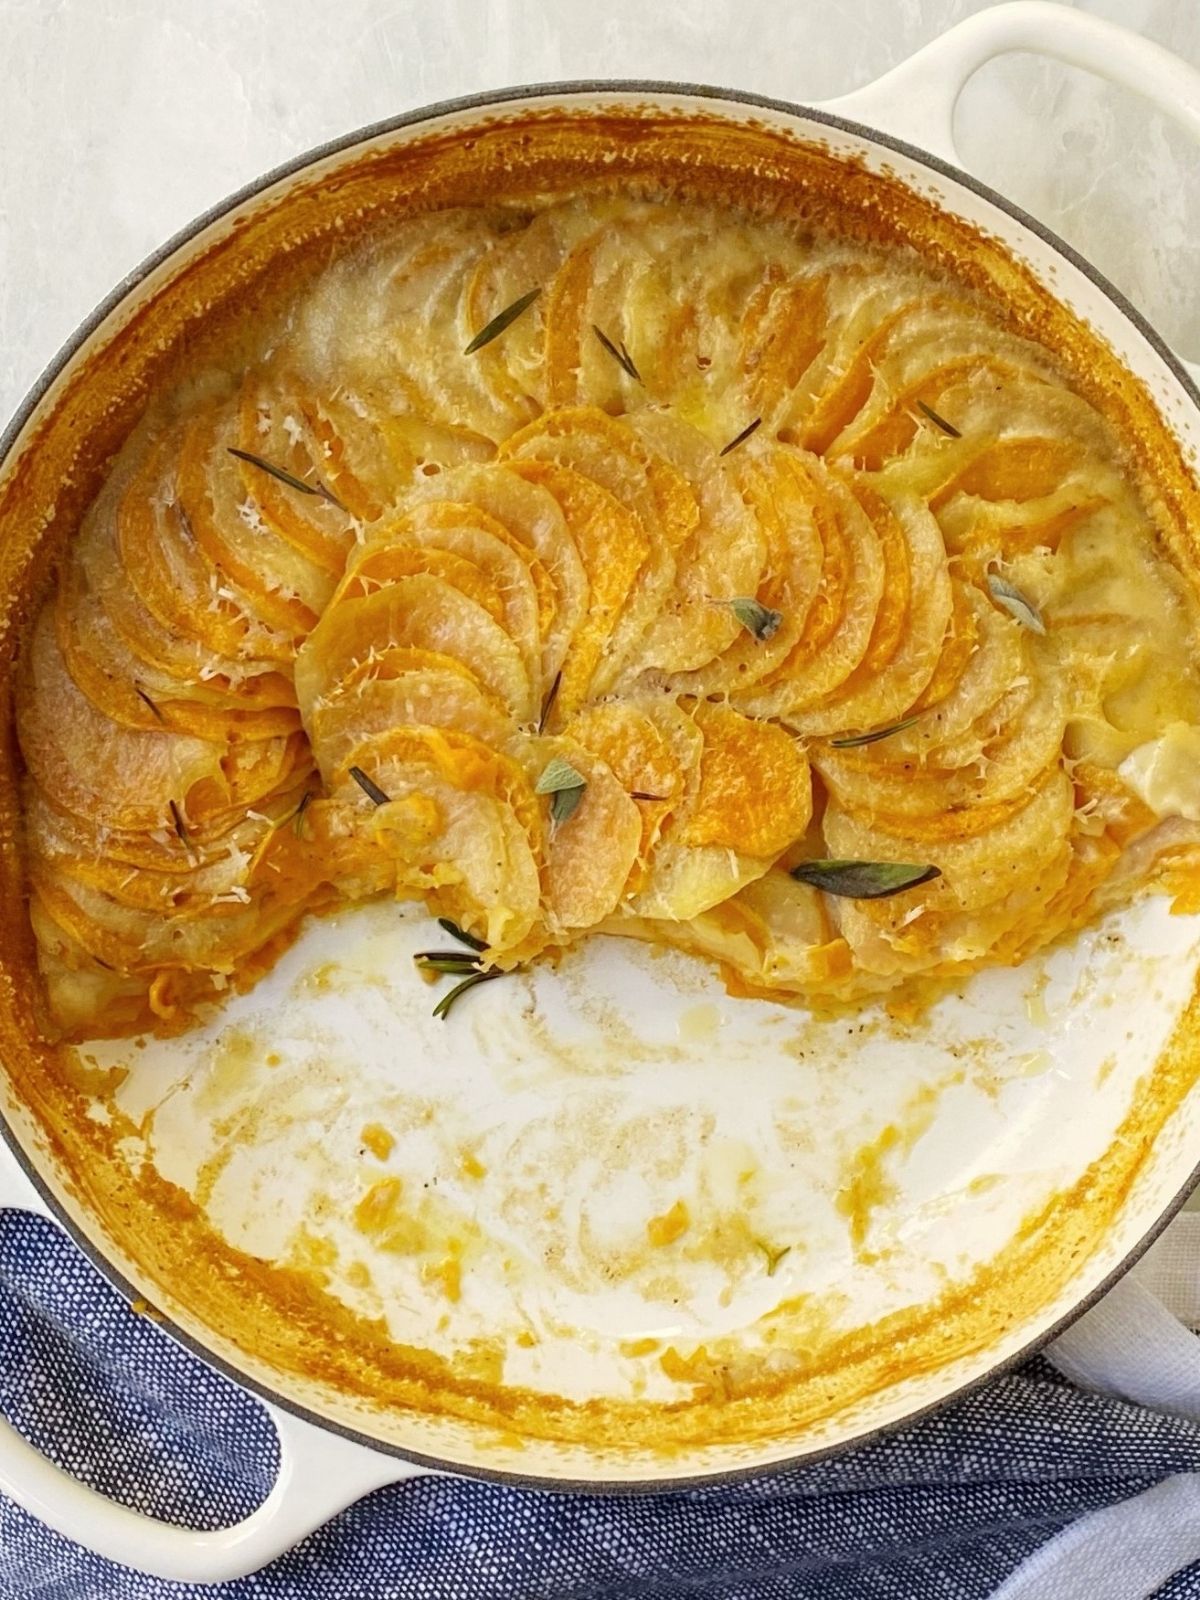 partially eaten casserole of sweet potato gratin